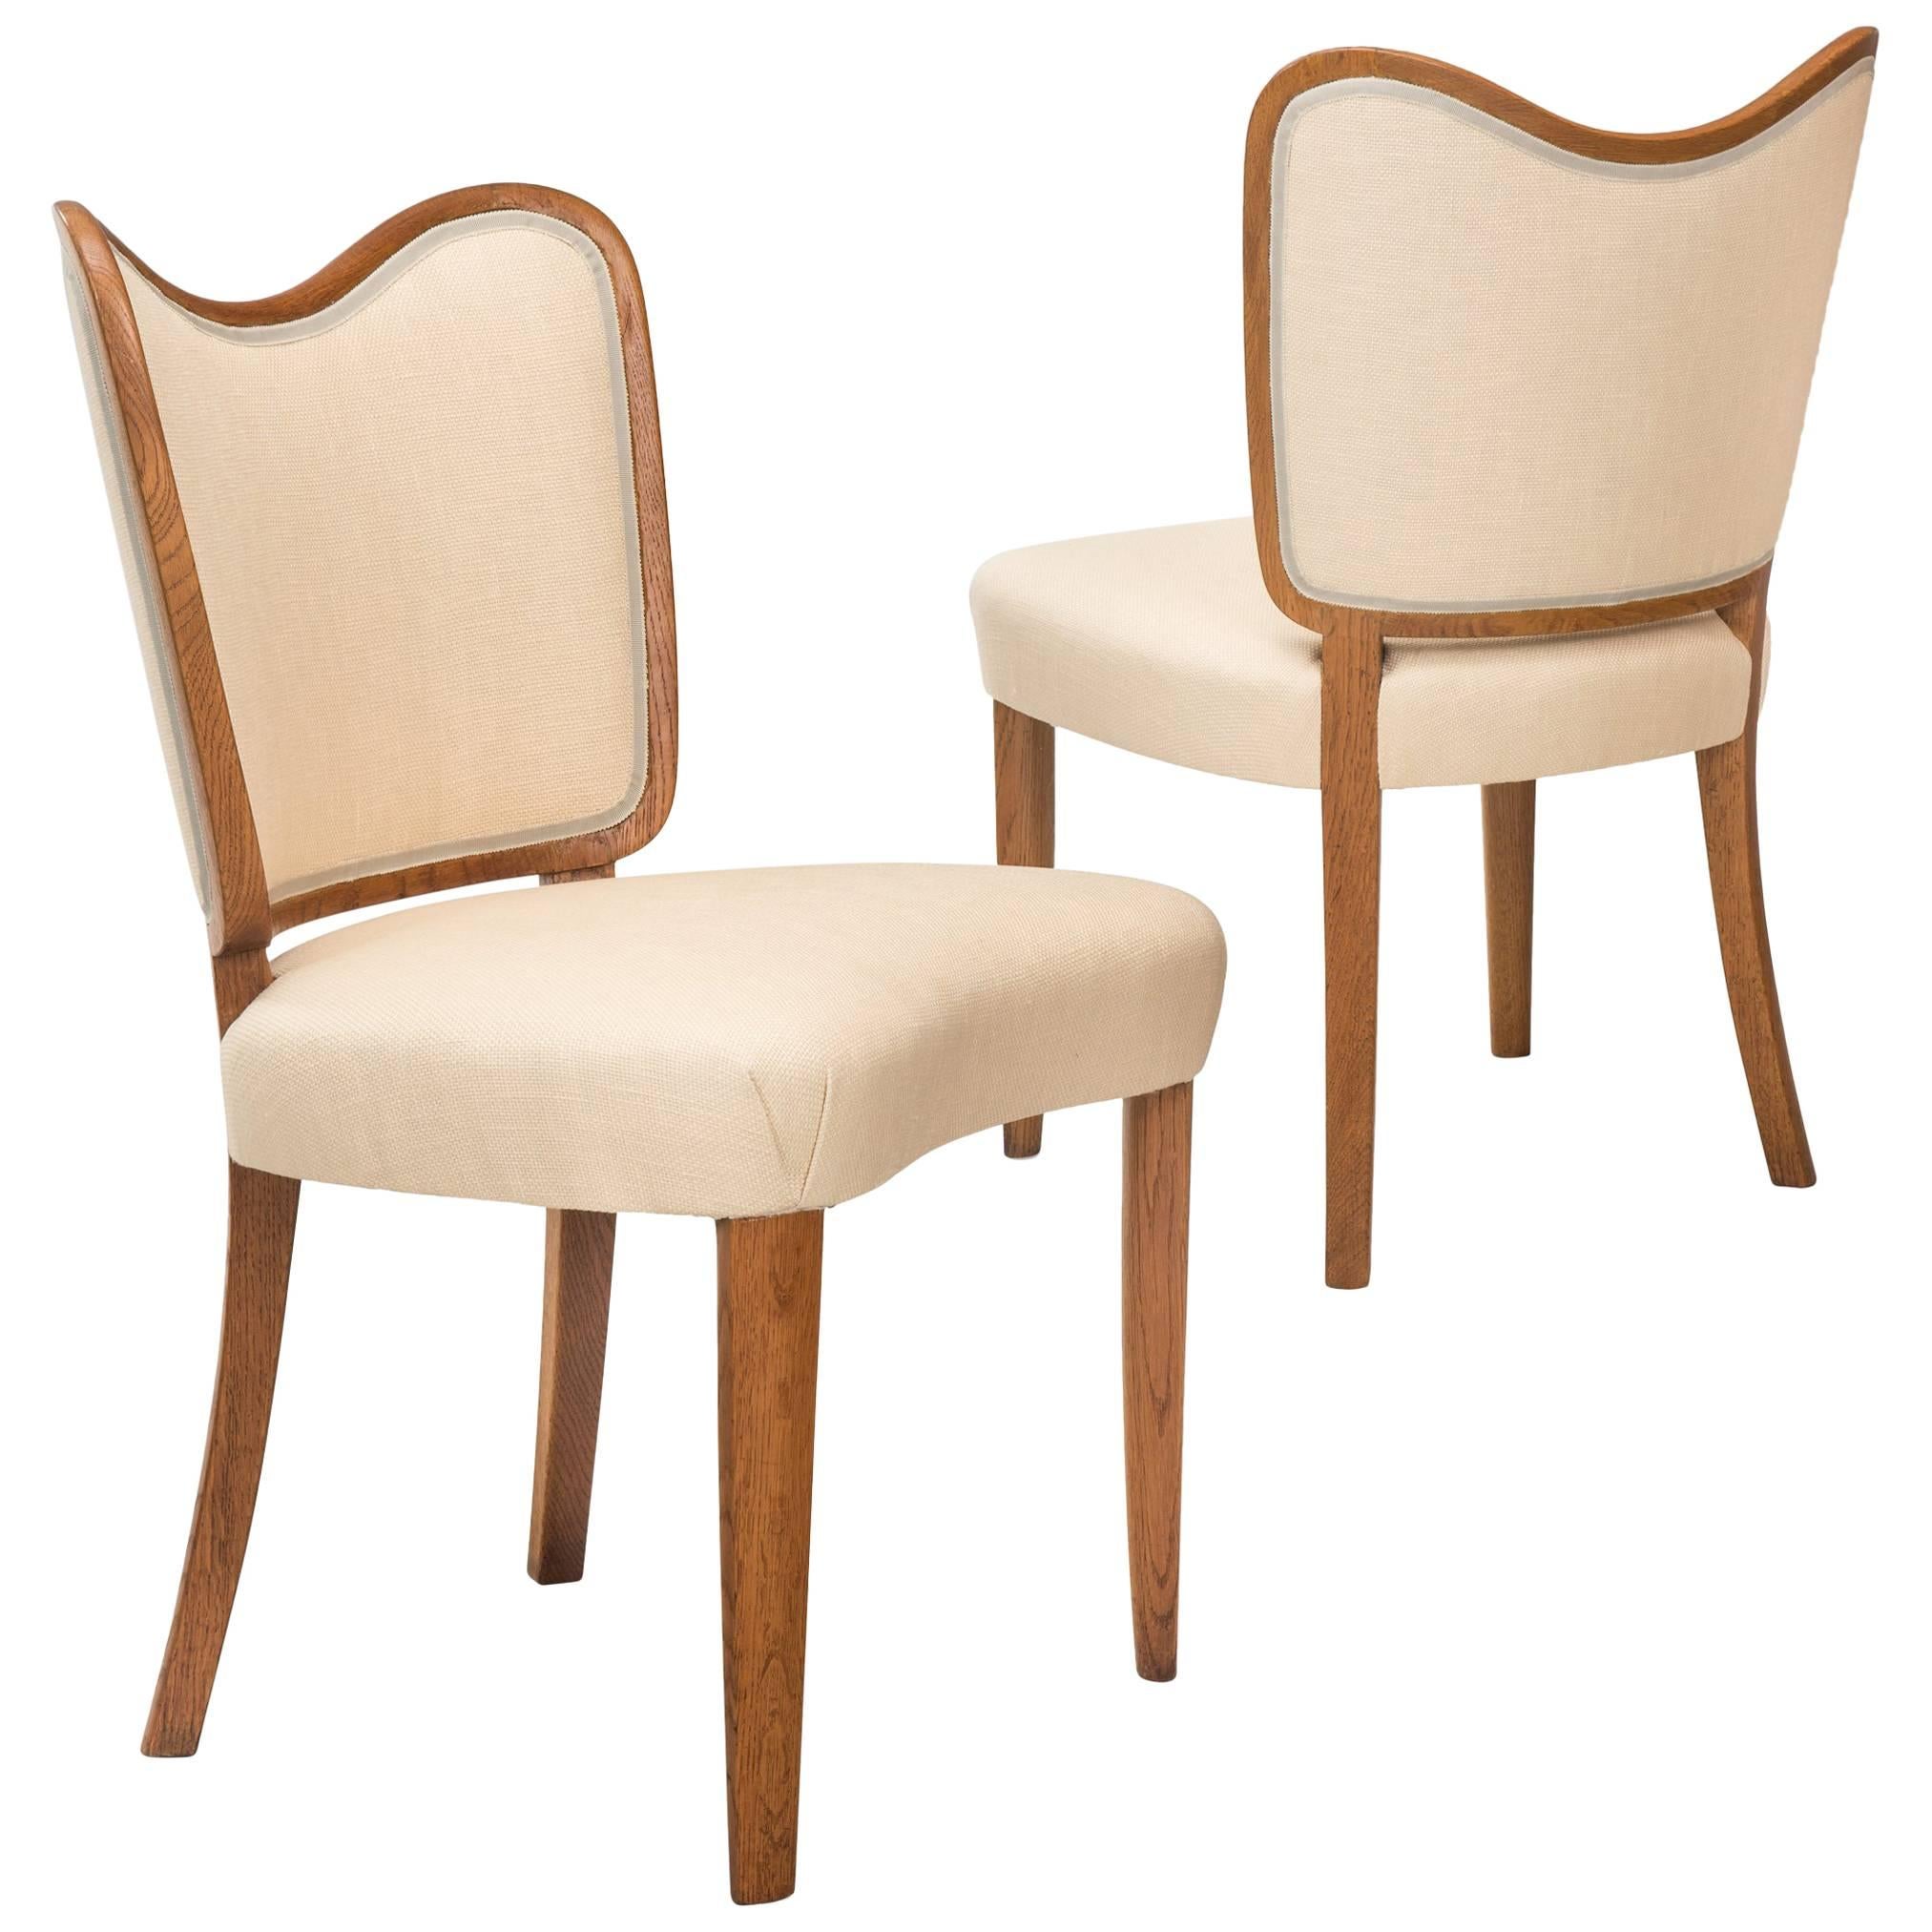 Axel Einar Hjorth, Pair of Curvaceous Swedish Oak Side Chairs